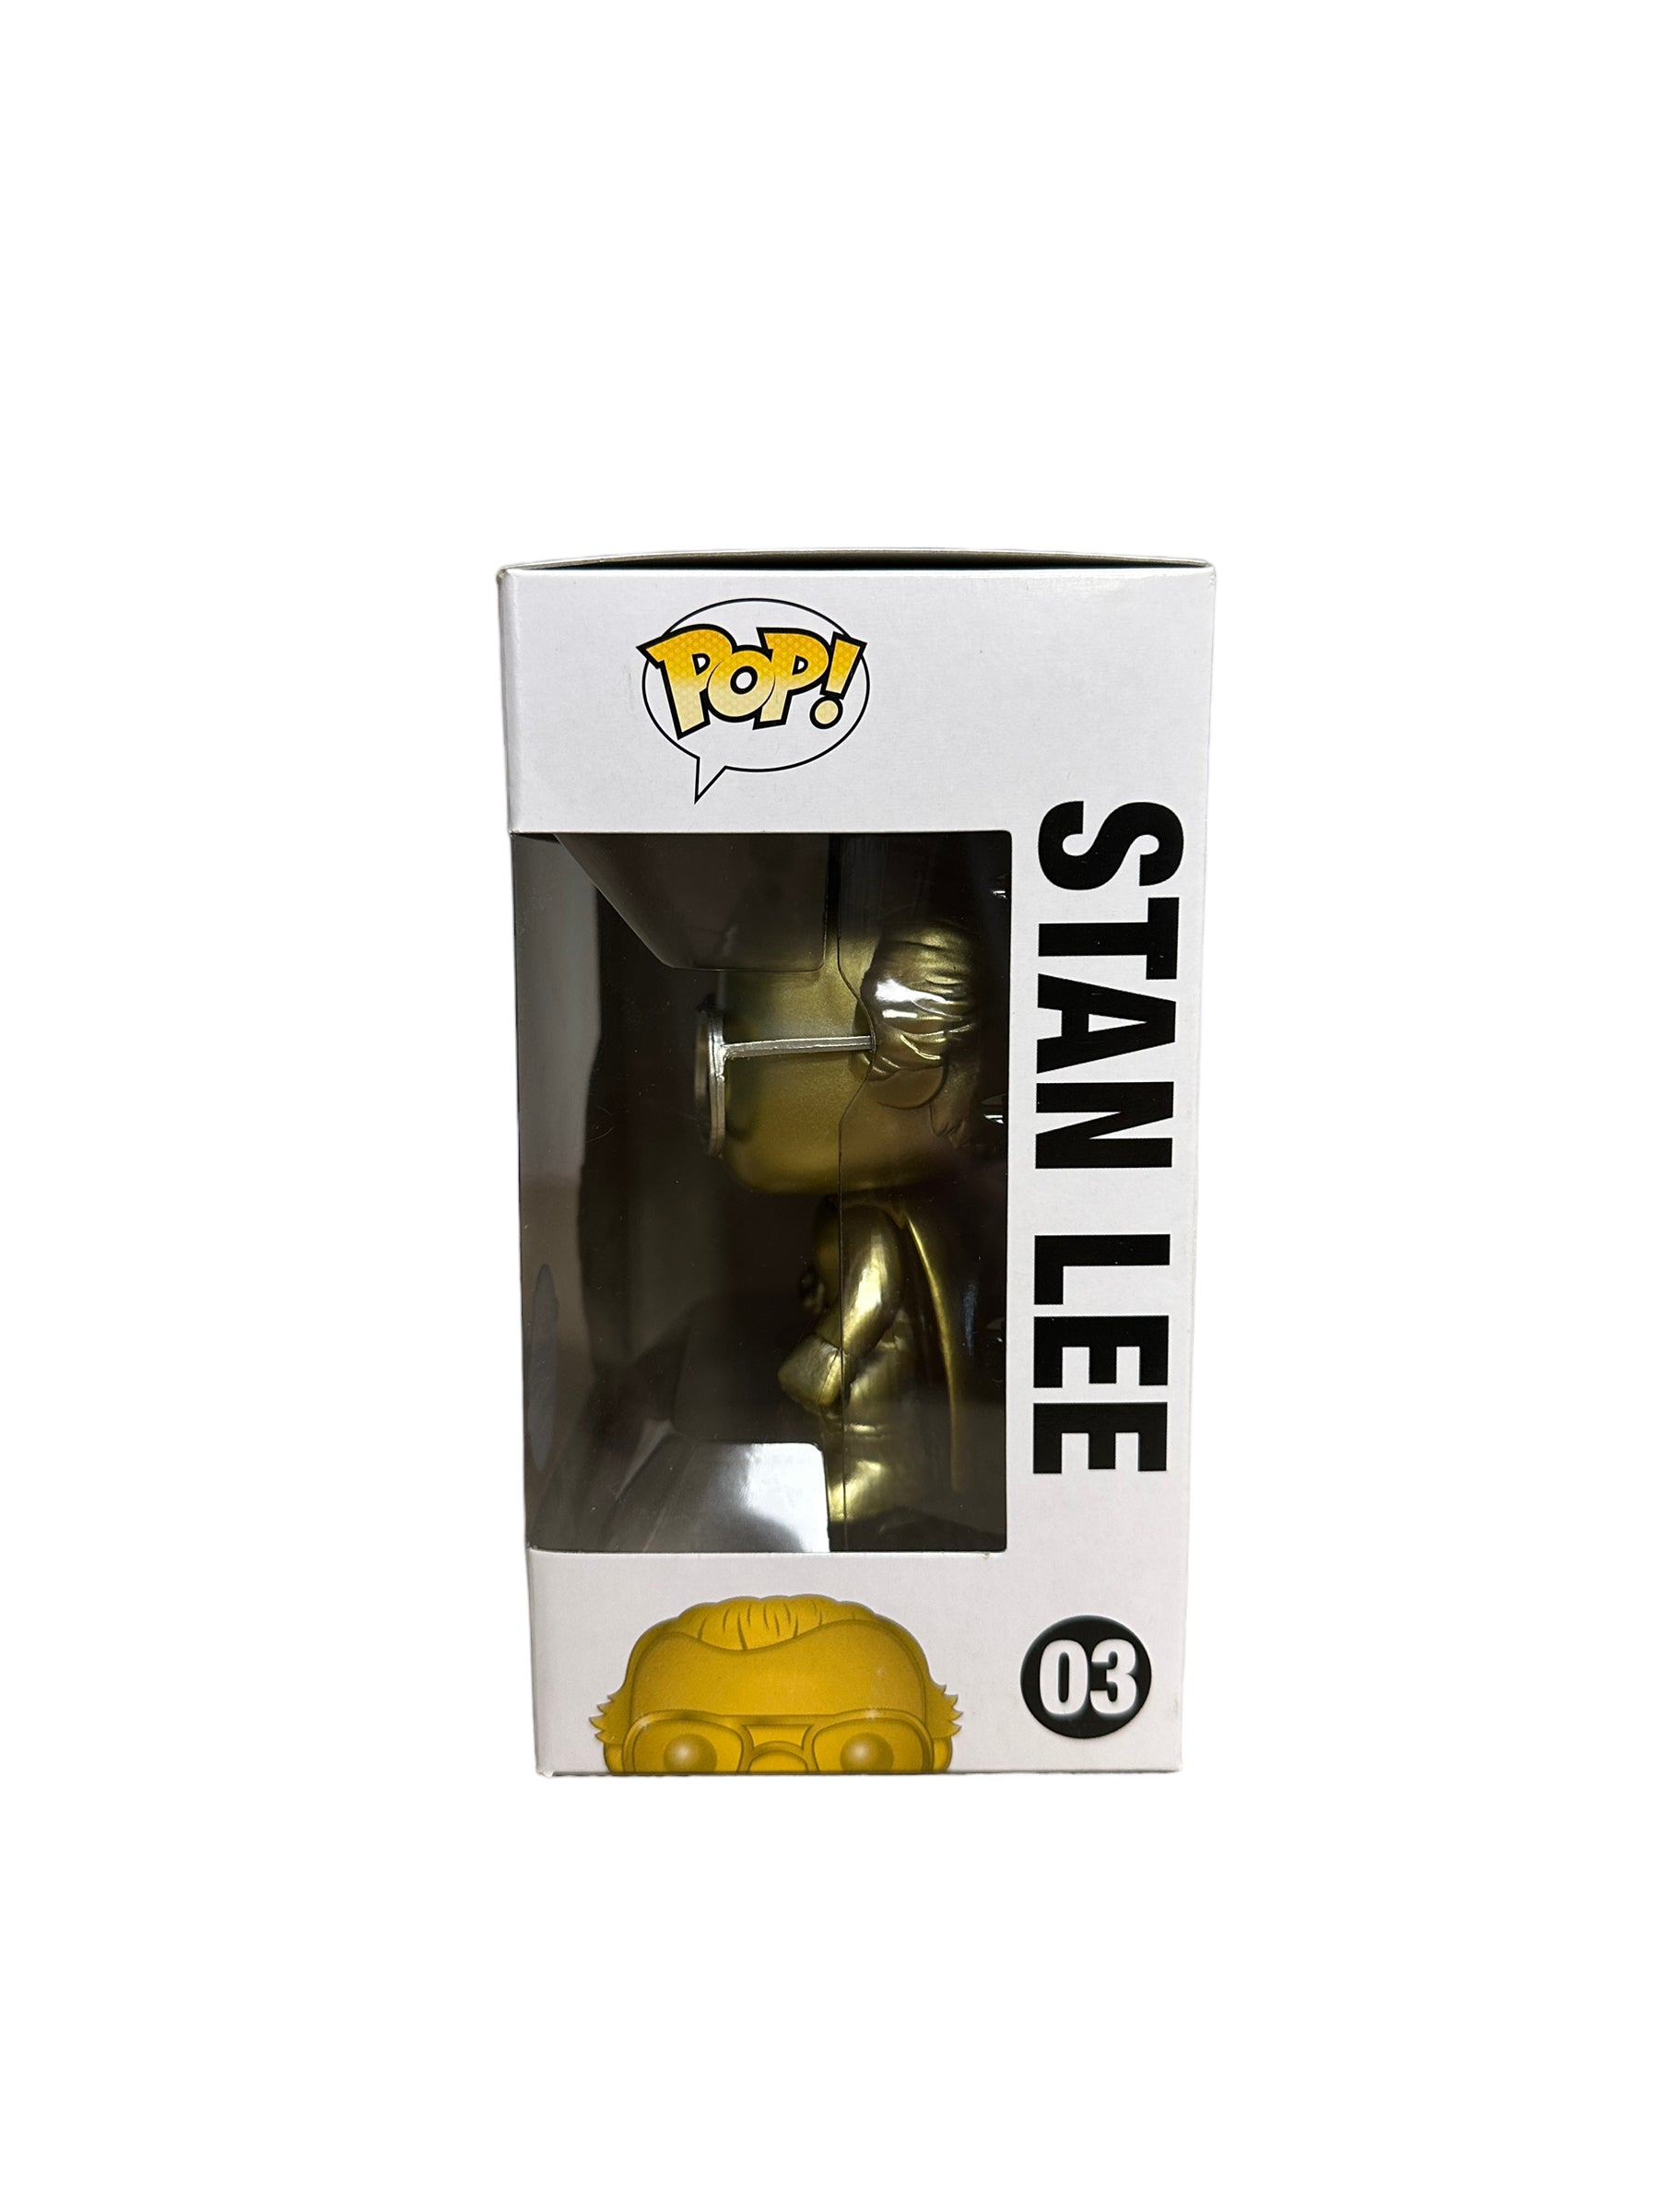 Stan Lee #03 (Superhero Gold) Funko Pop! - Stanleecollectibles.com Exclusive - Condition 7.5/10